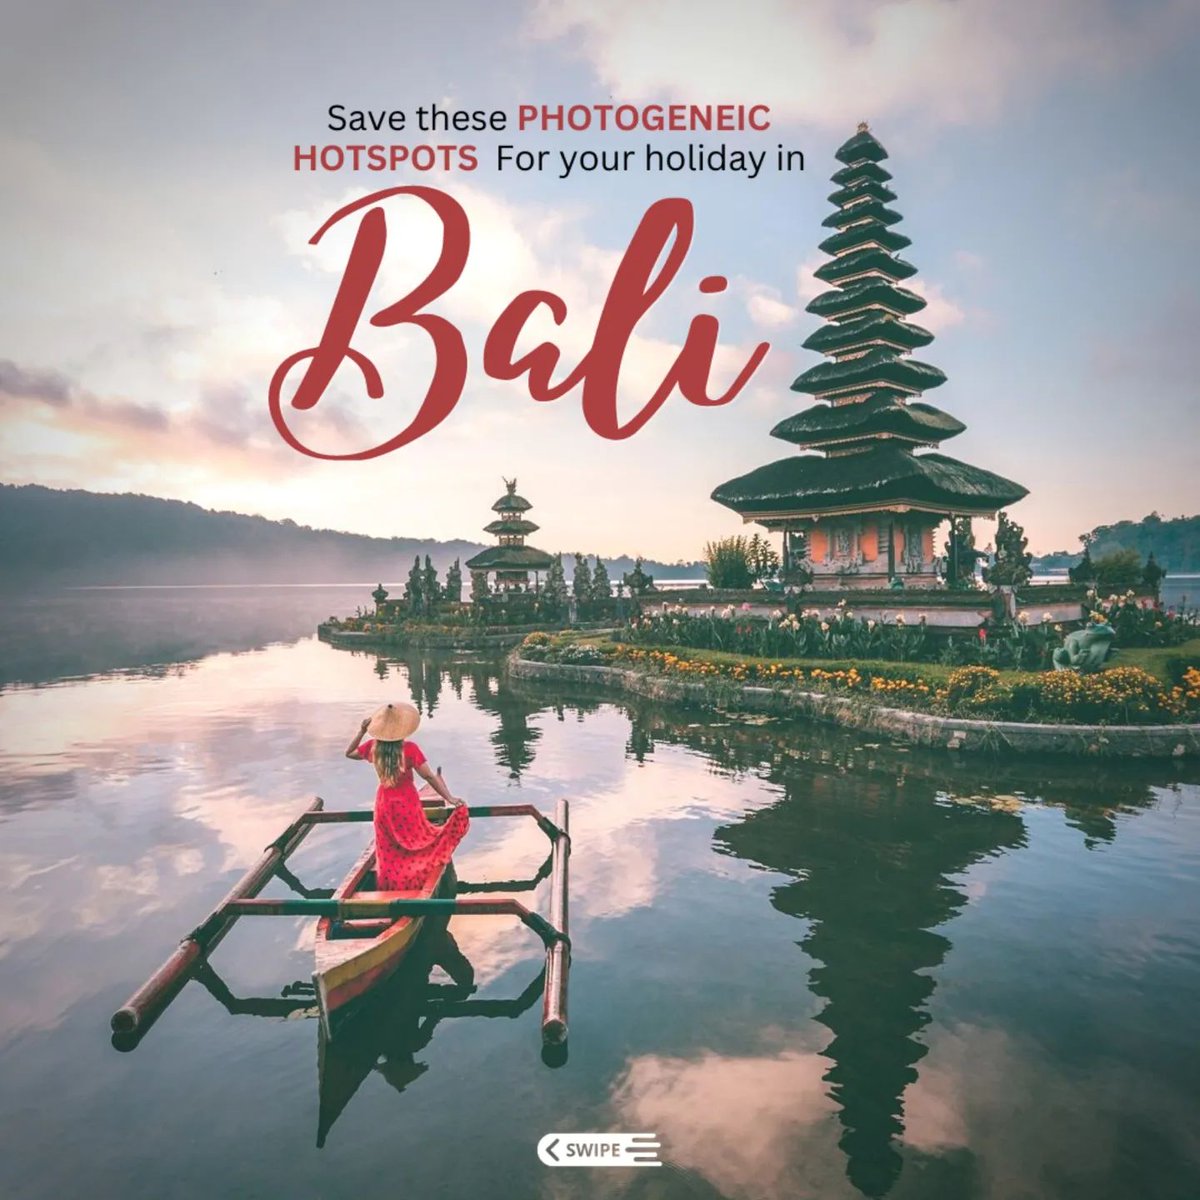 Save these PHOTOGENIC HOTSPOTS for your holiday in Bali❤️✅✨
.
.
Location 📍:- Bali Indonesia ❤️
.
.
#balidmc #bali #baliindonesia #reels #photography #travel #travelblogger #explorepage✨ #instagram #instatravel #travelgram #travelcouples #landscape #indonesia #balidaily